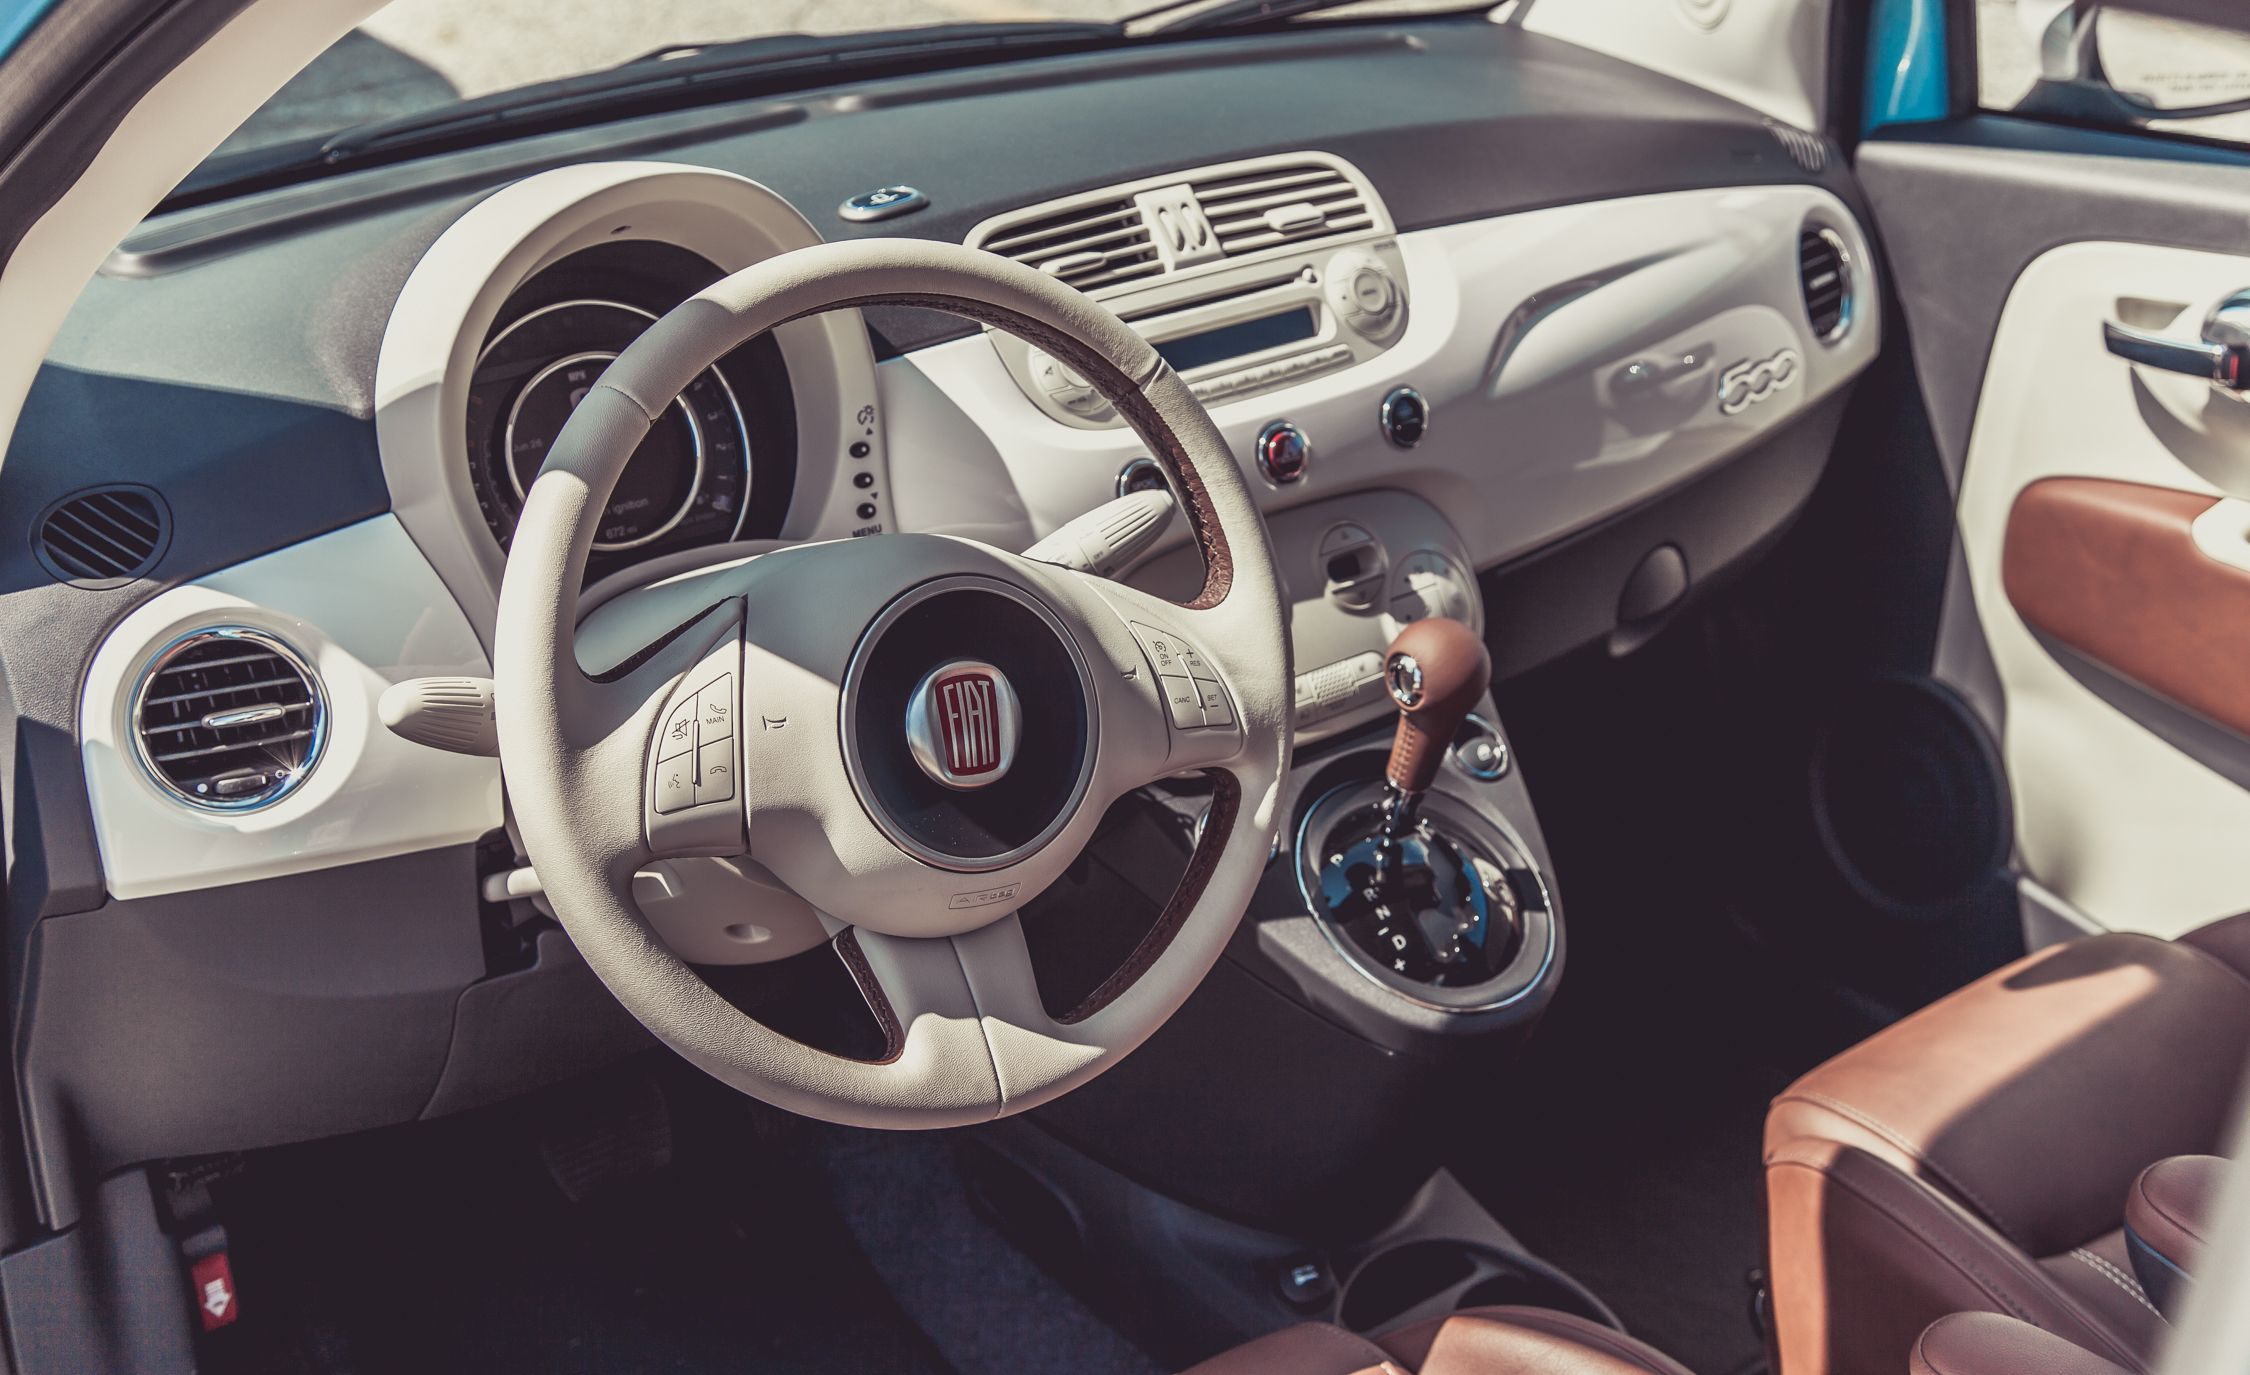 Fiat 500 Review, For Sale, Colours, Interior, Specs & News